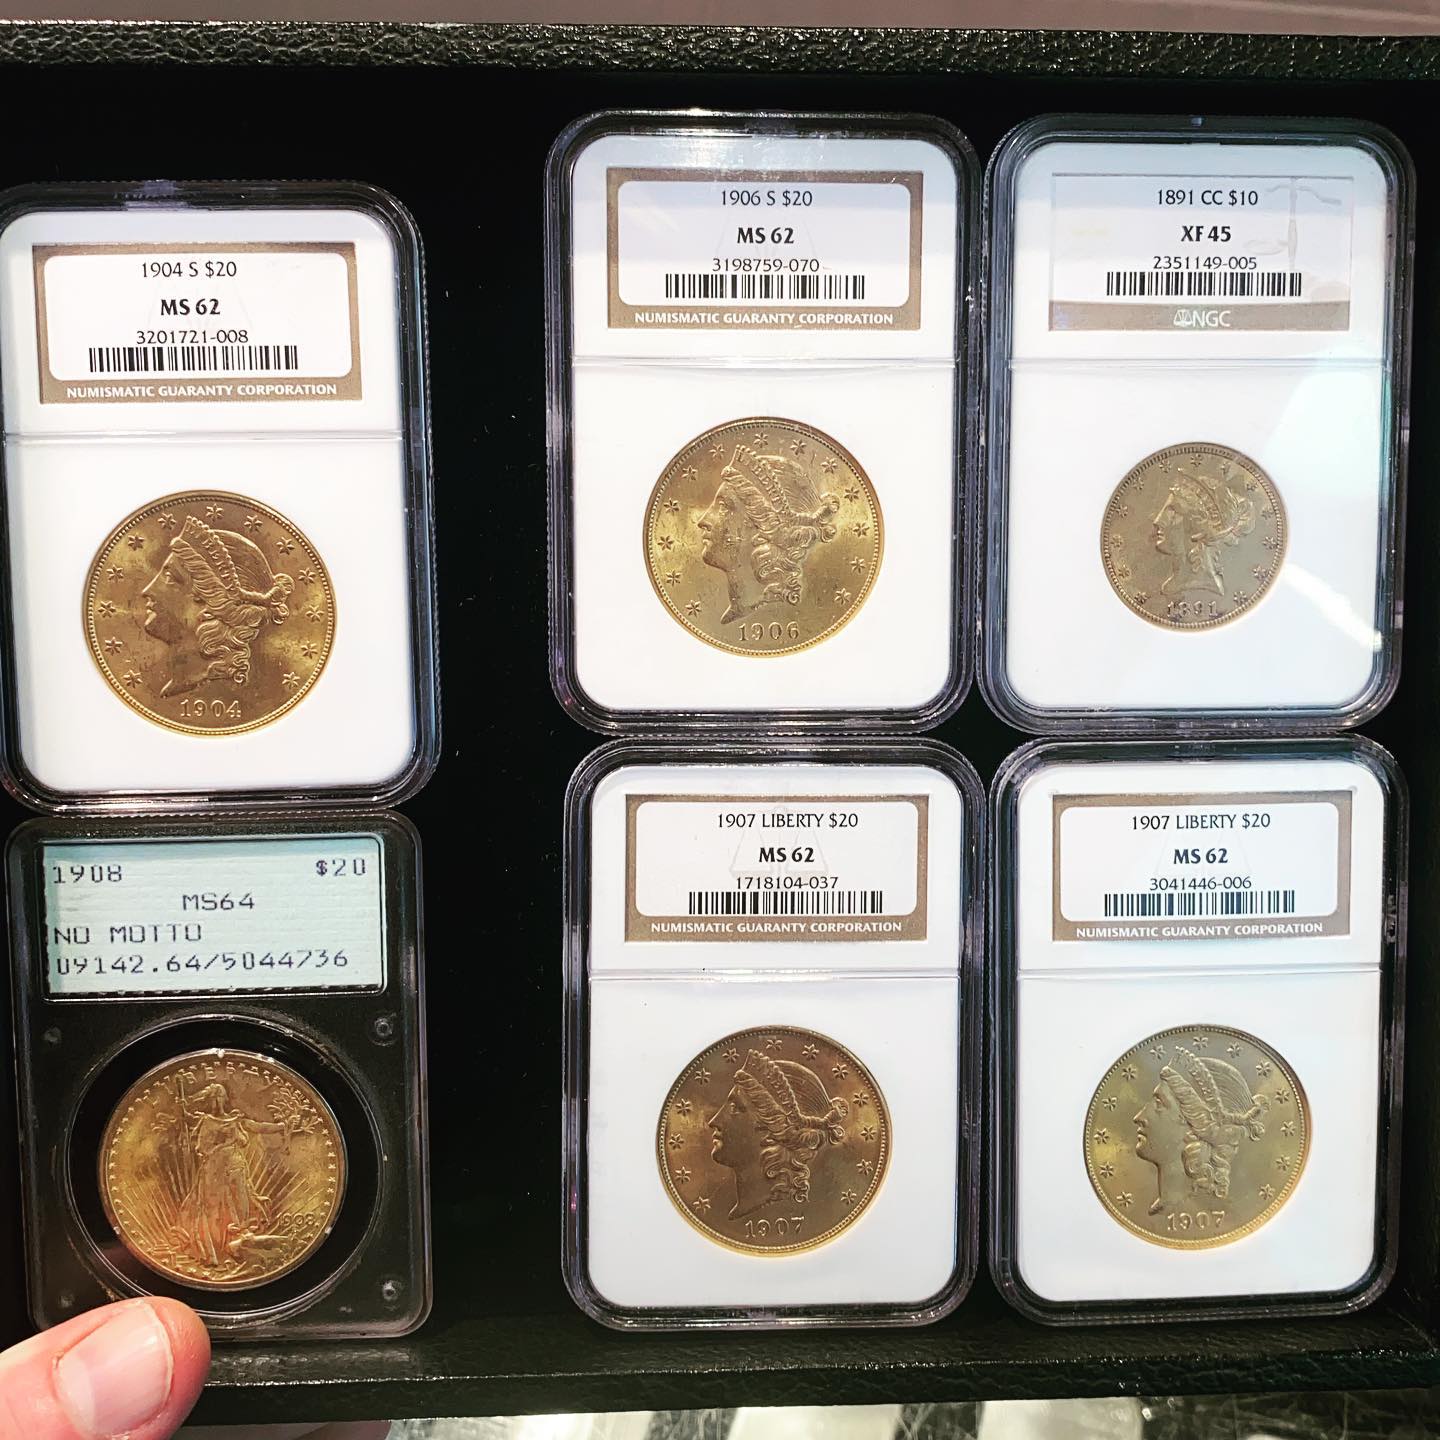 Manteca Gold, Pawn & Coins